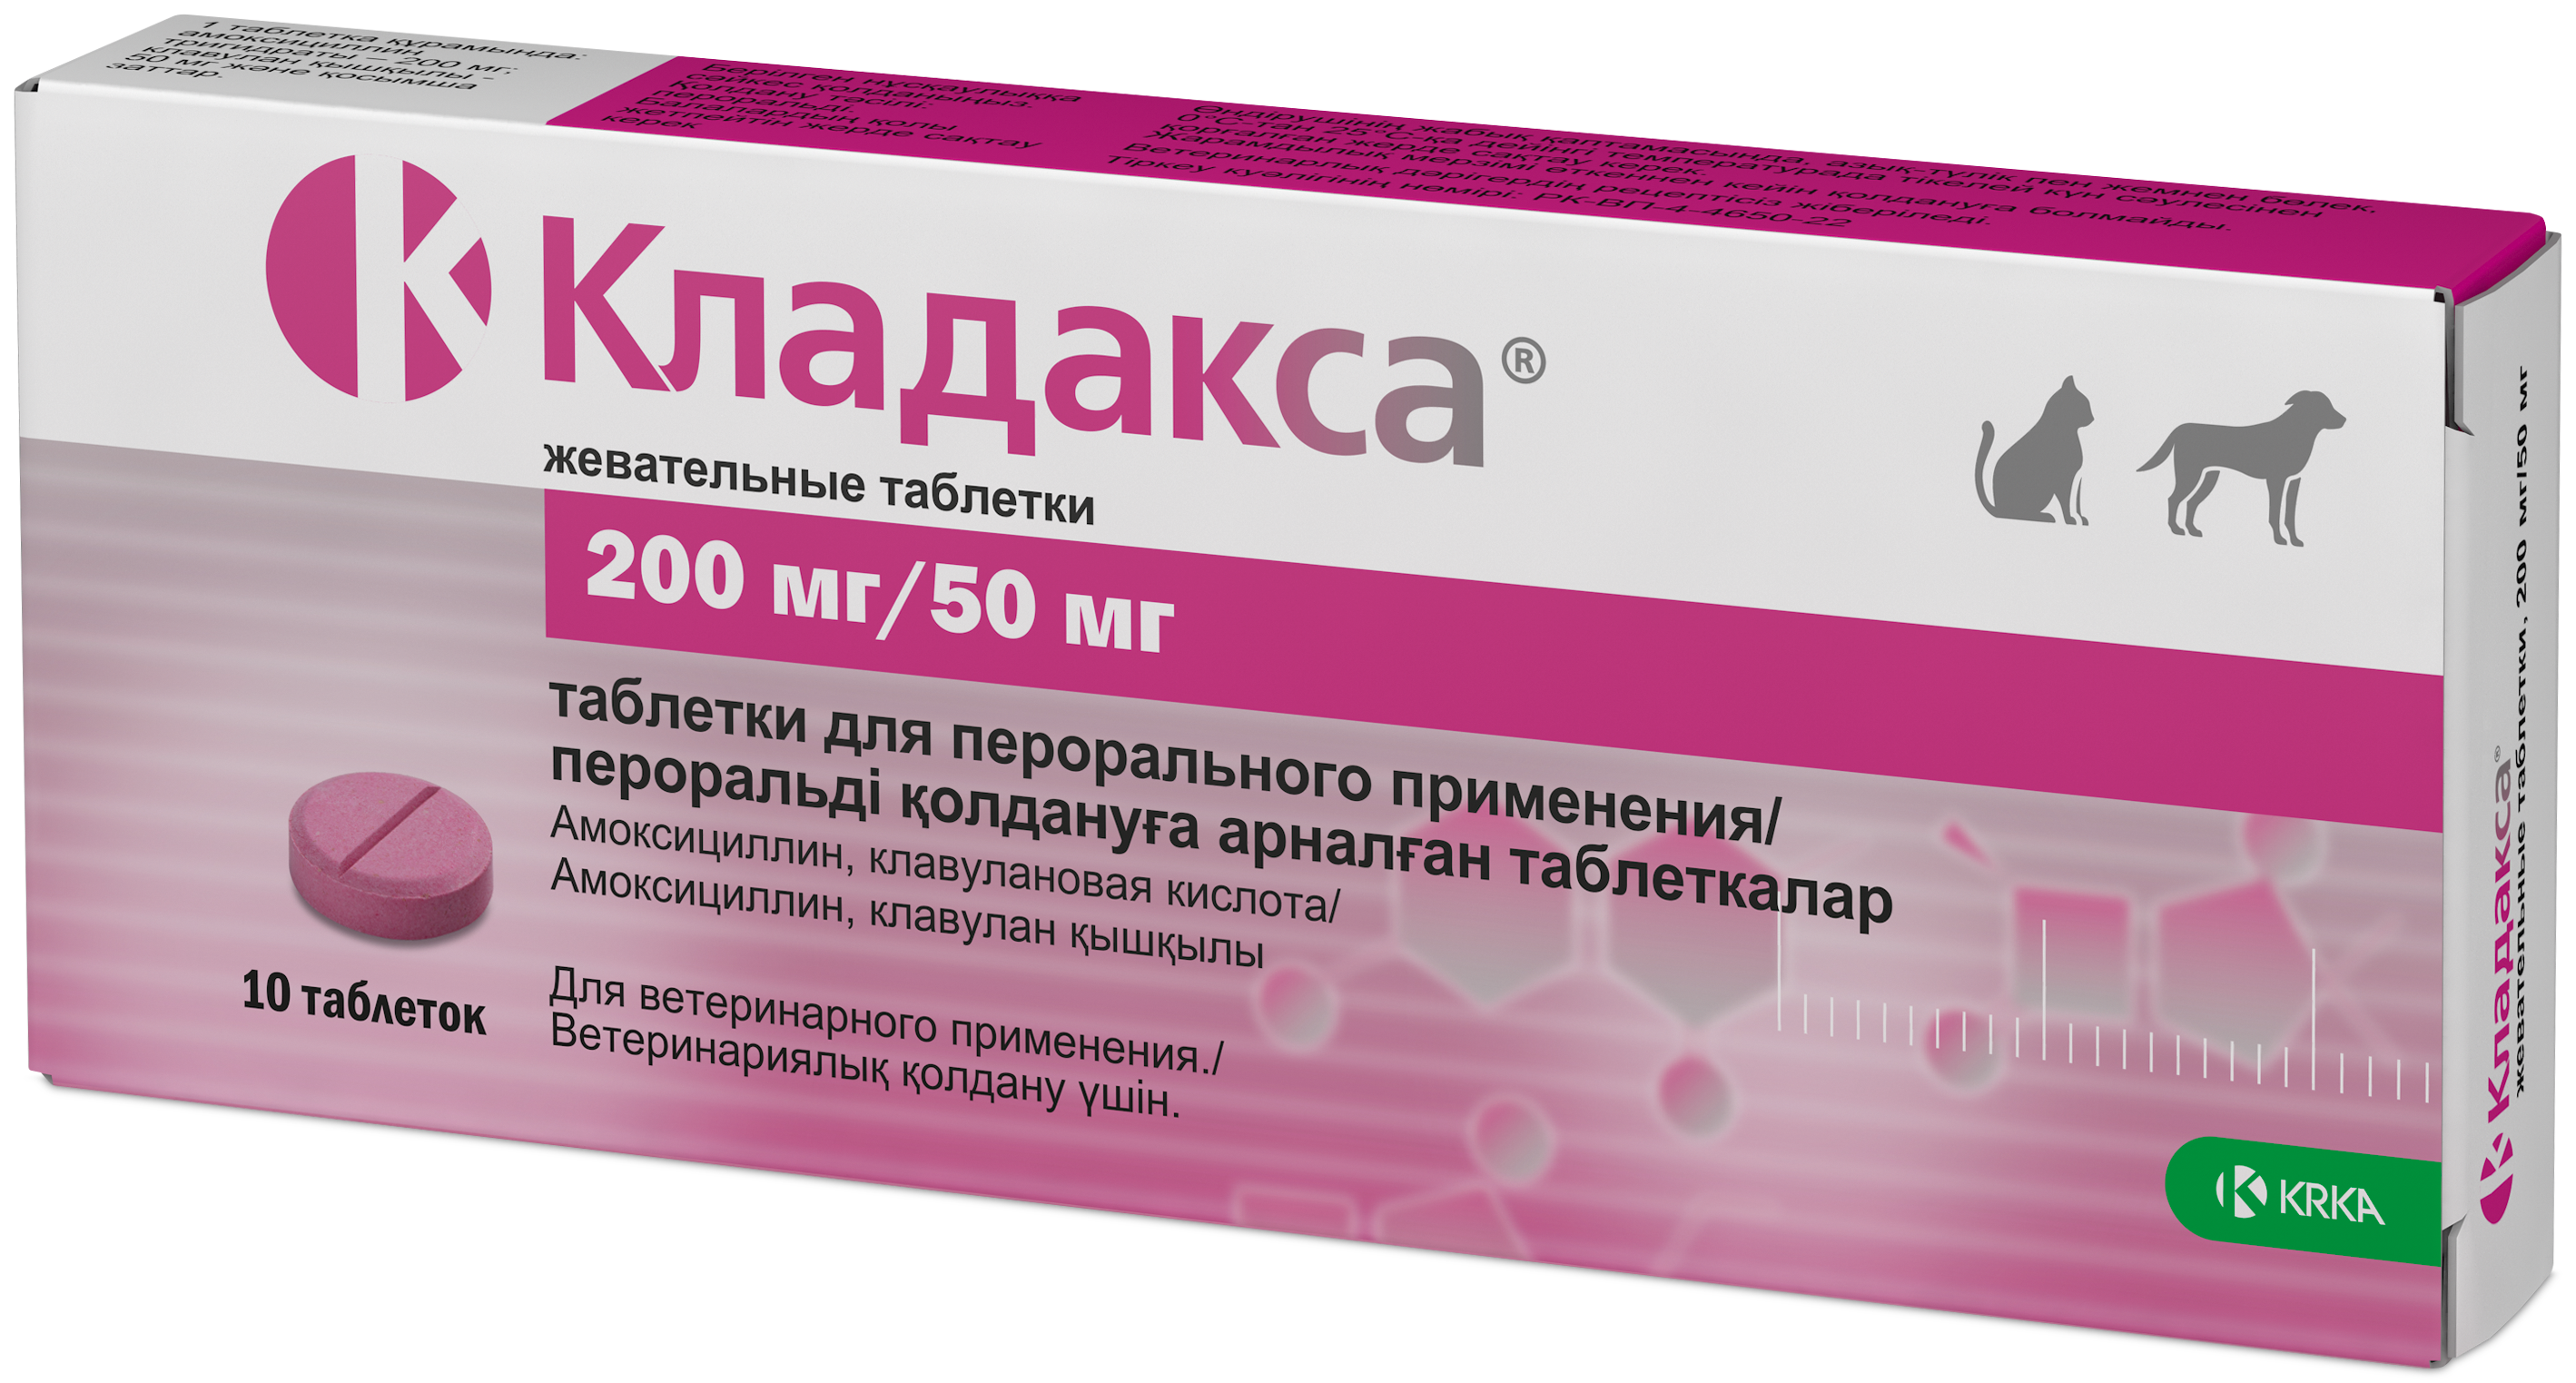 Кладакса 200 мг/50 мг (аналог Синулокса), 10 таблеток – купить в Воронеже  по цене интернет-магазина «Две собаки»